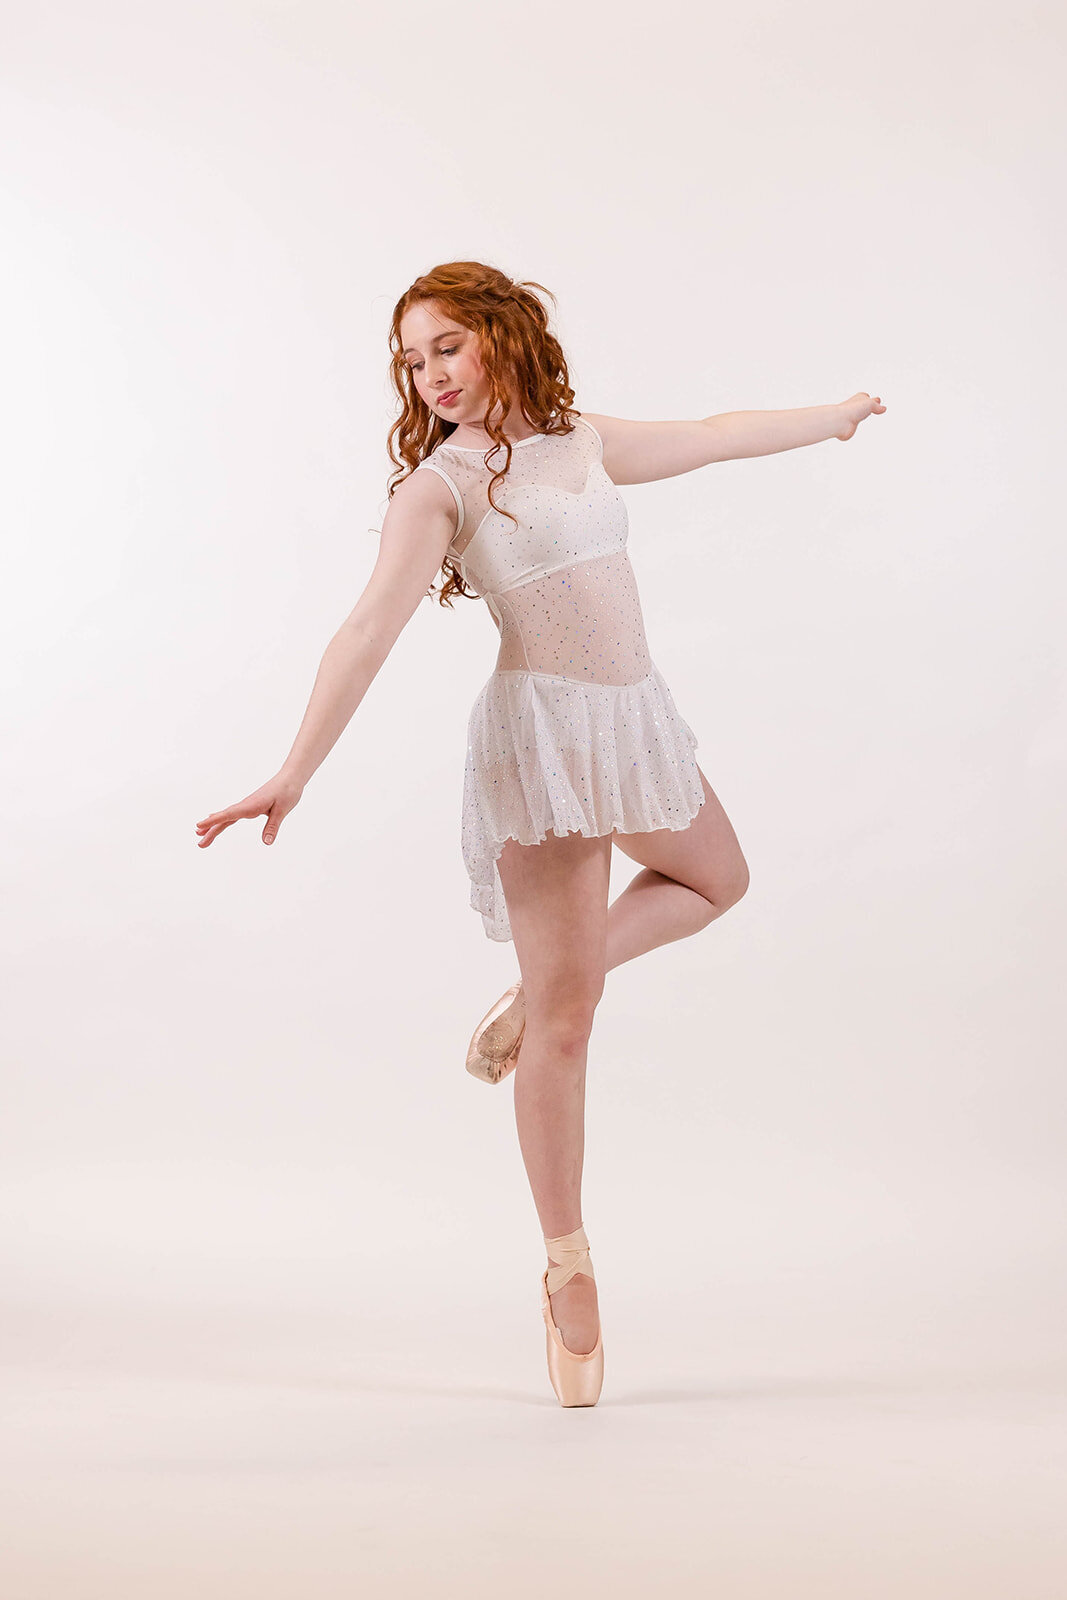 HeatherOsteenPhotography-@bryonna.dance - 10_websize